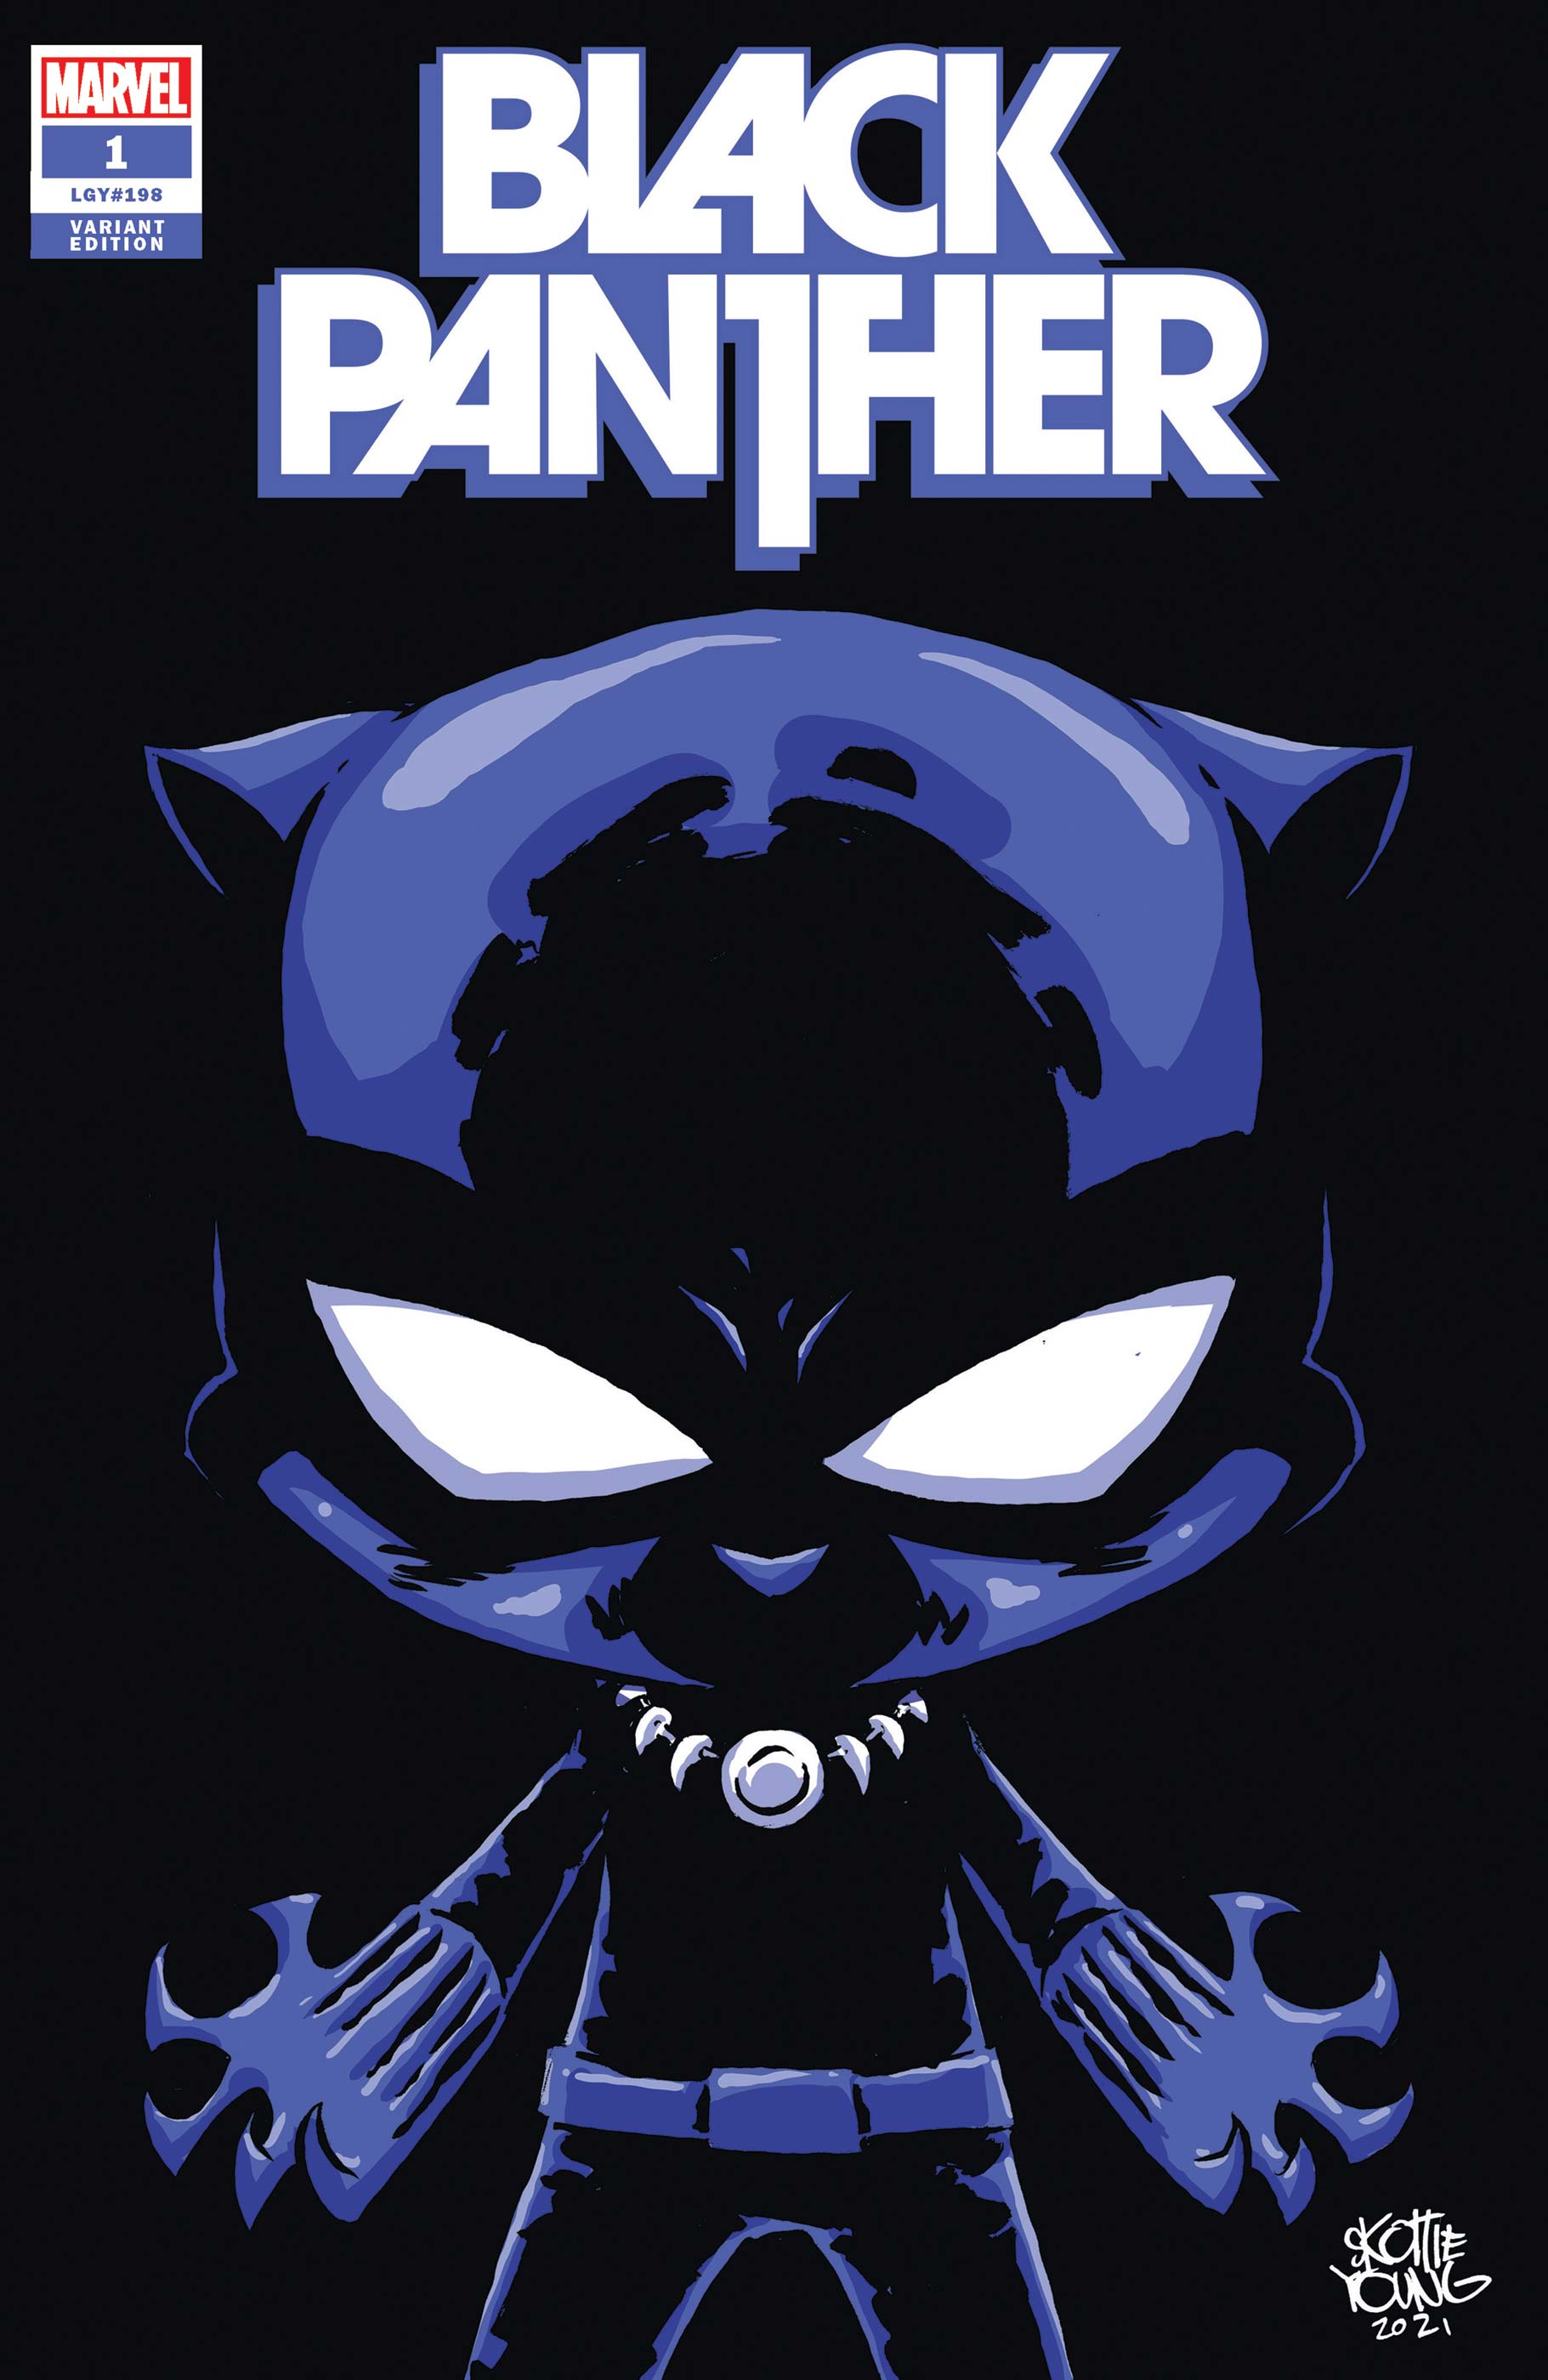 Black Panther (2021) #1 (Variant)